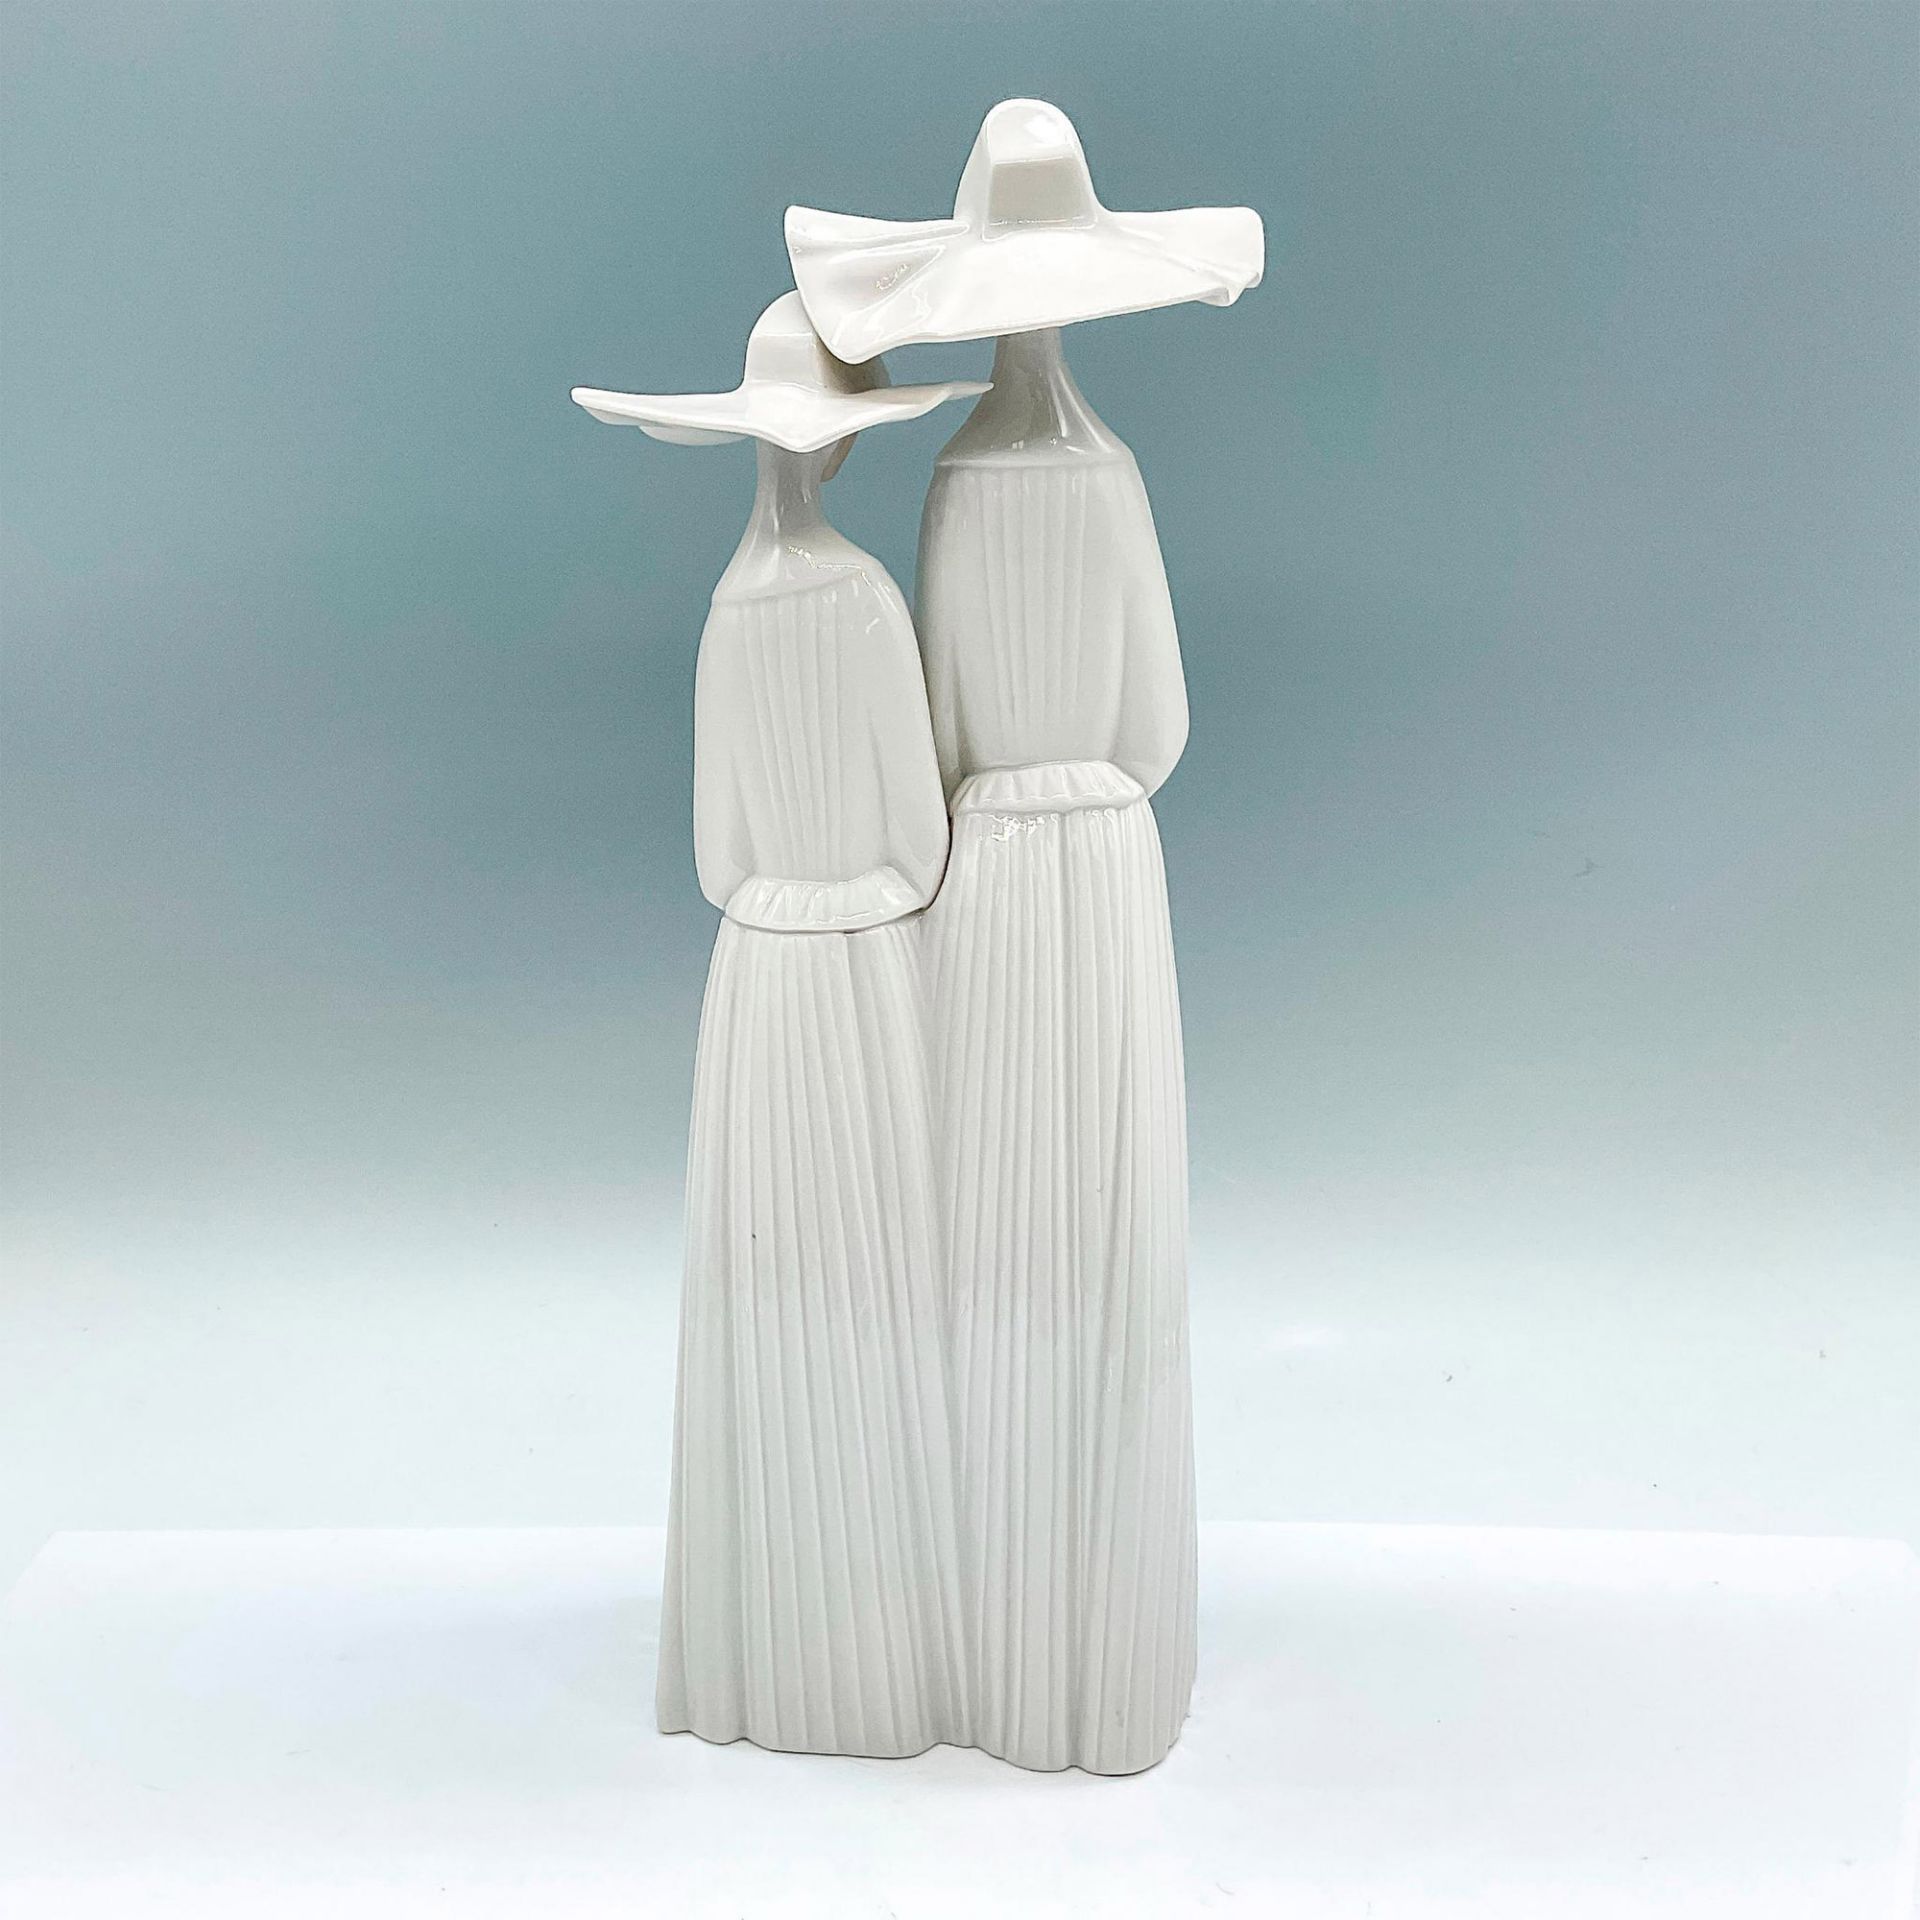 Nuns 1004611 - Lladro Porcelain Figurine - Image 2 of 3